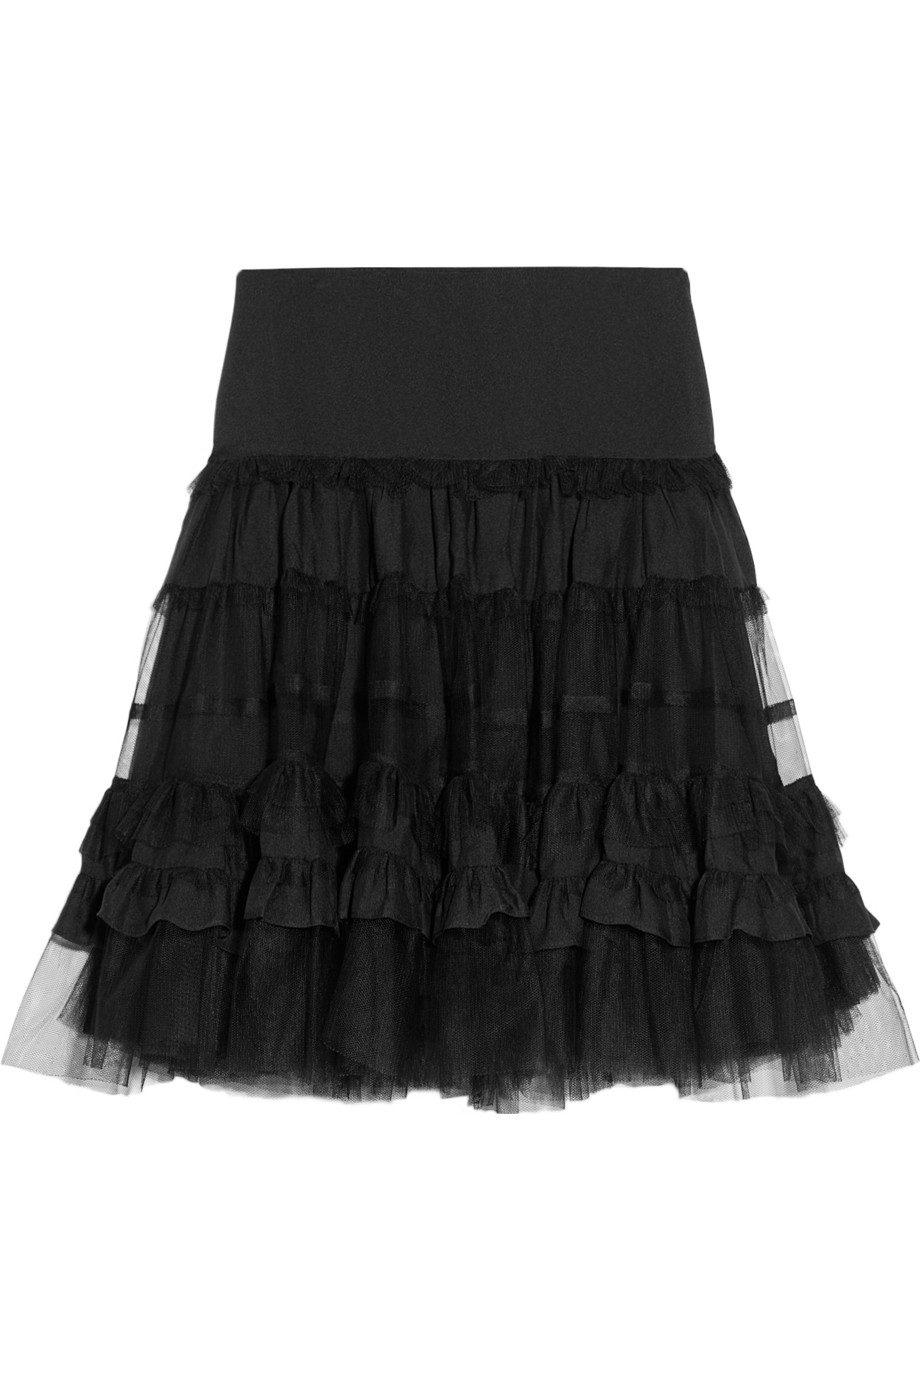 Lyst - Elizabeth And James Mina Drawstring Silkcrepe Skirt in Black